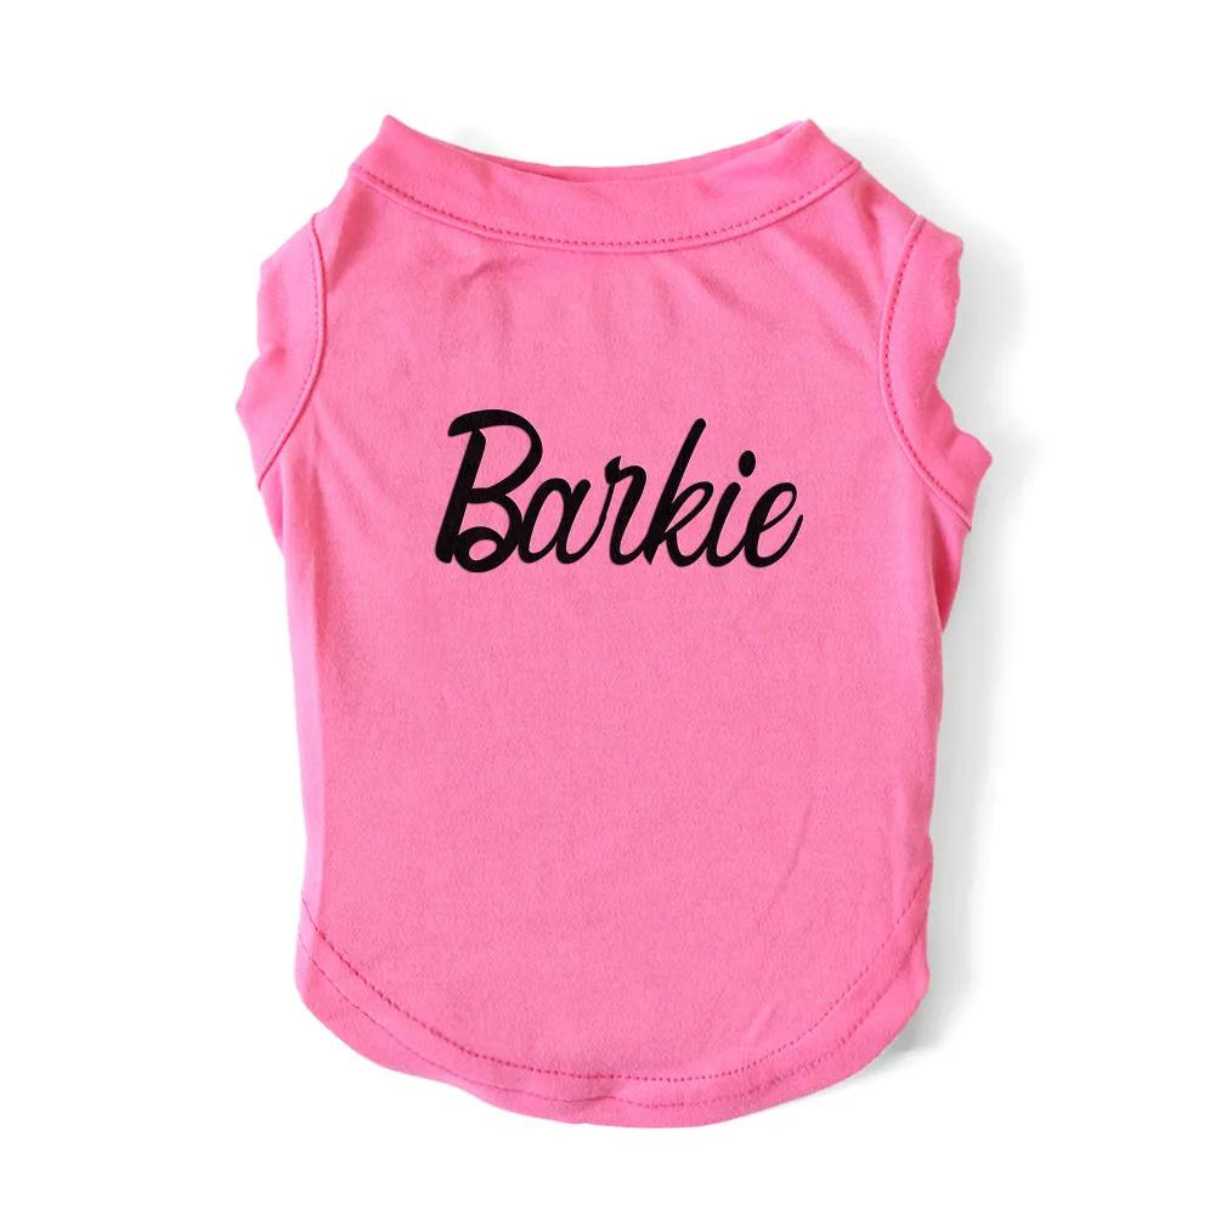 Barkie Pink Tshirt, sleeveless, singlet with black text, Dog clothing